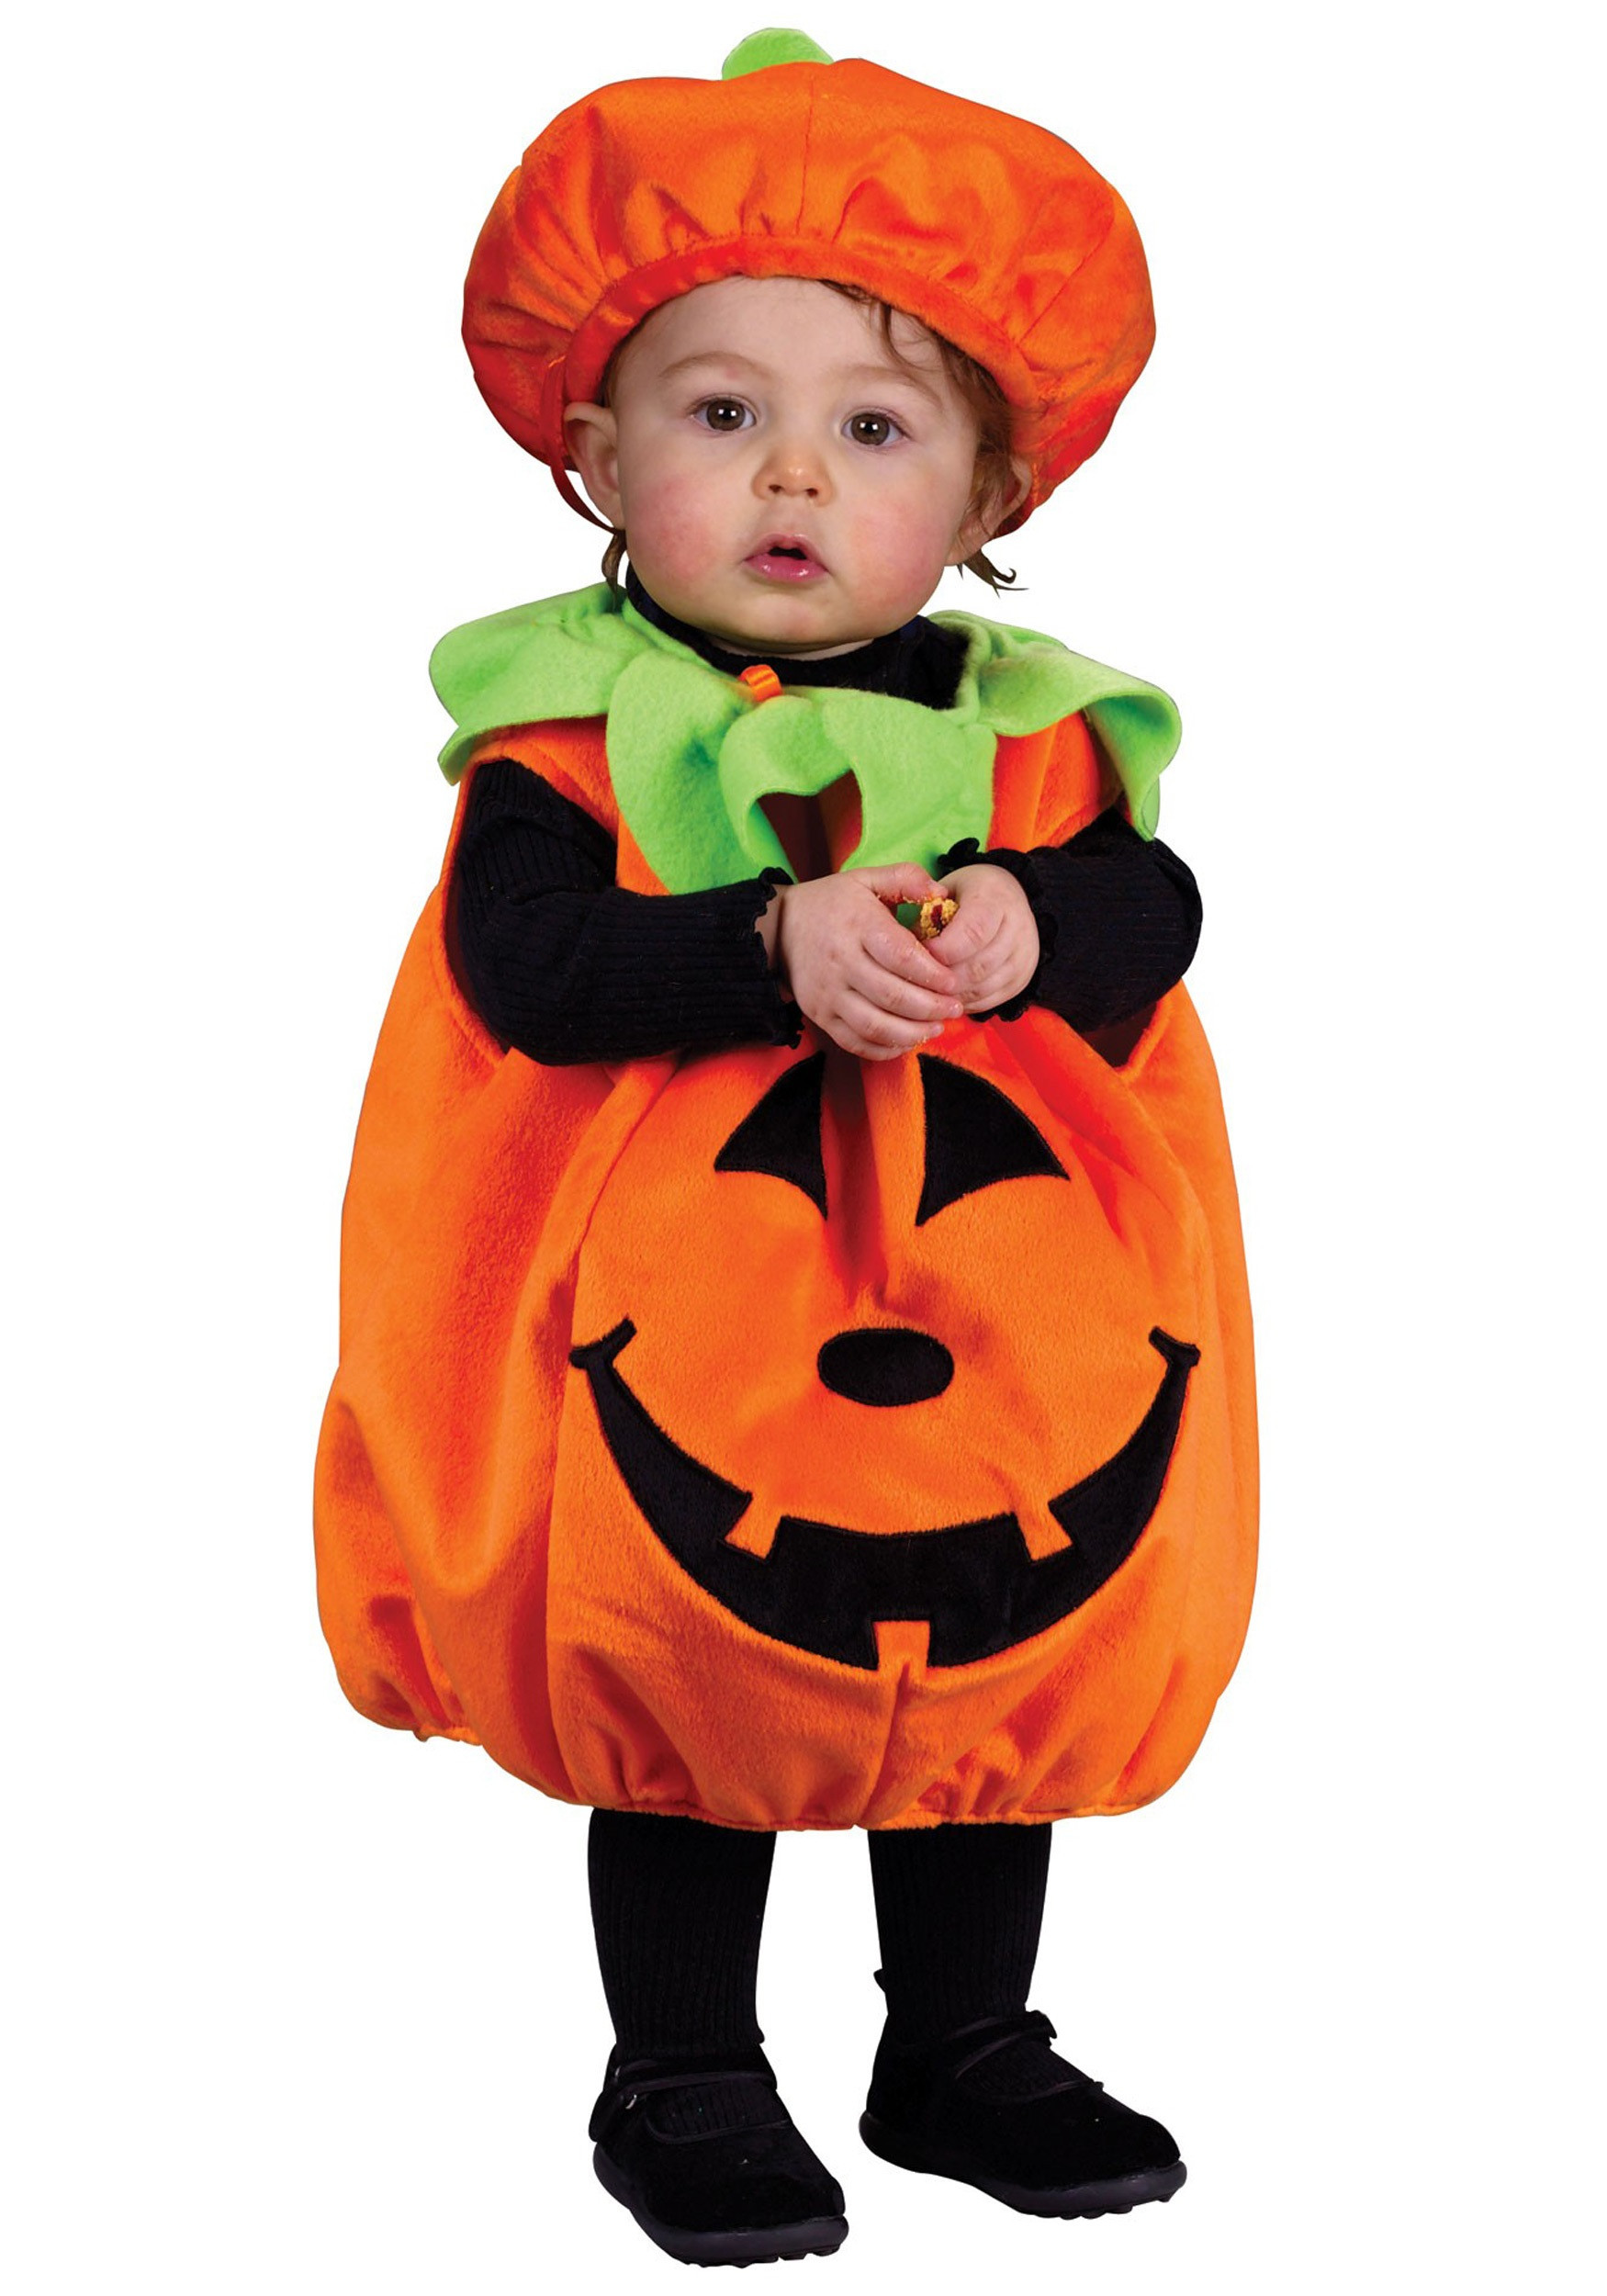 DIY Pumpkin Costume Toddler
 Infant Pumpkin Costume